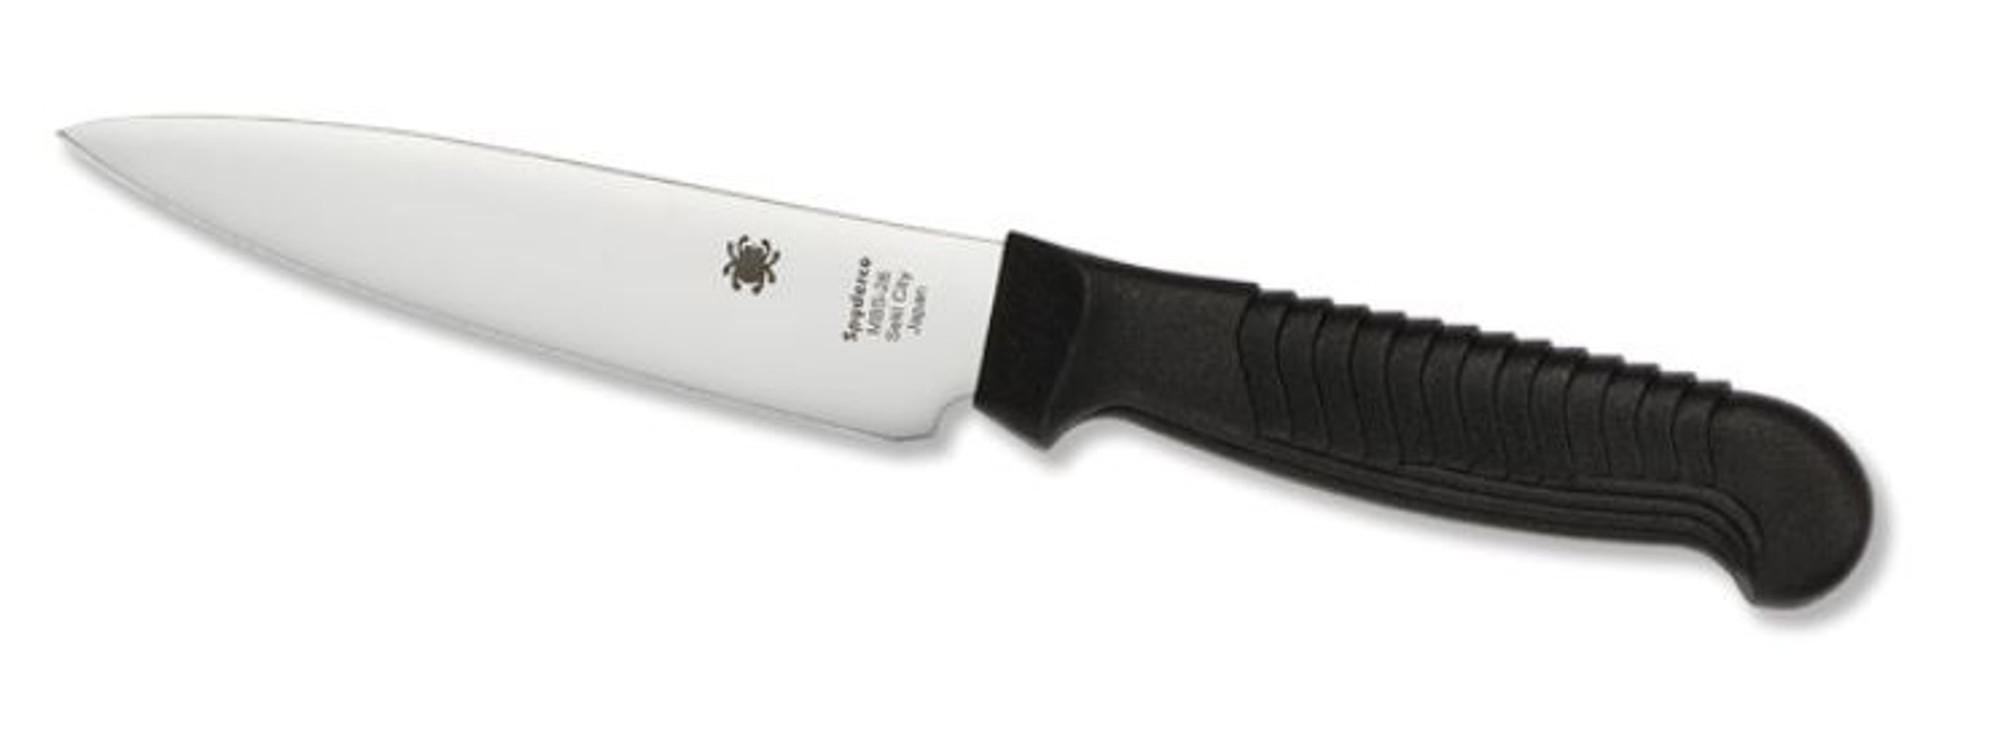 Spyderco K05PBK 4.5" Kitchen Knife - Black Handle